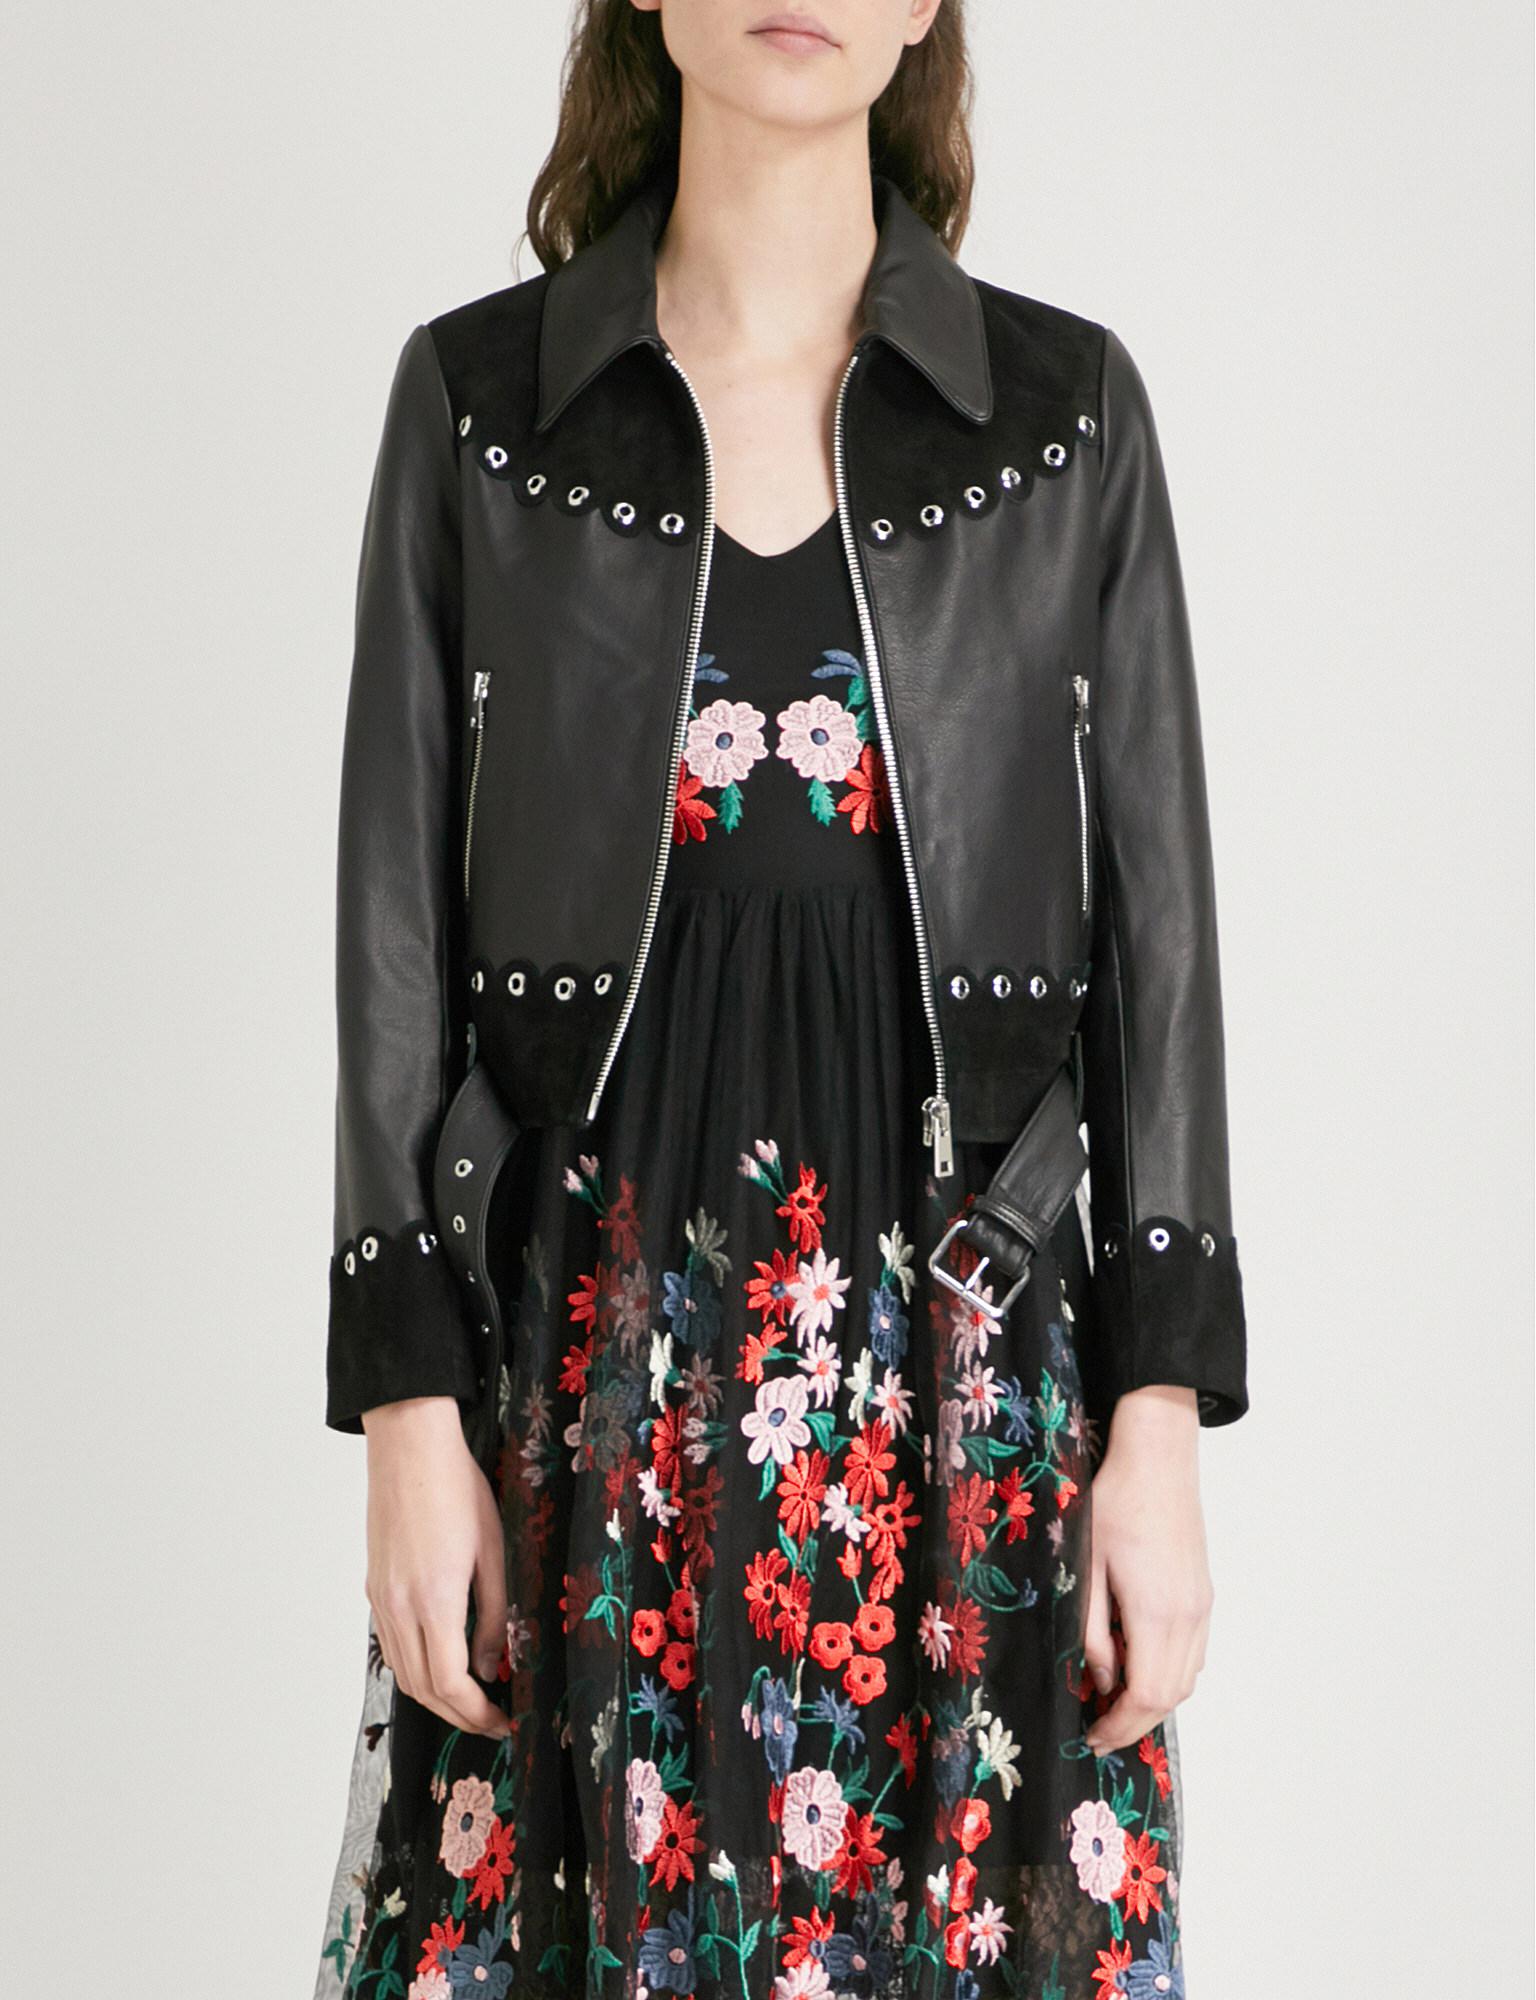 Maje Barisco Embellished Leather Jacket in Black | Lyst